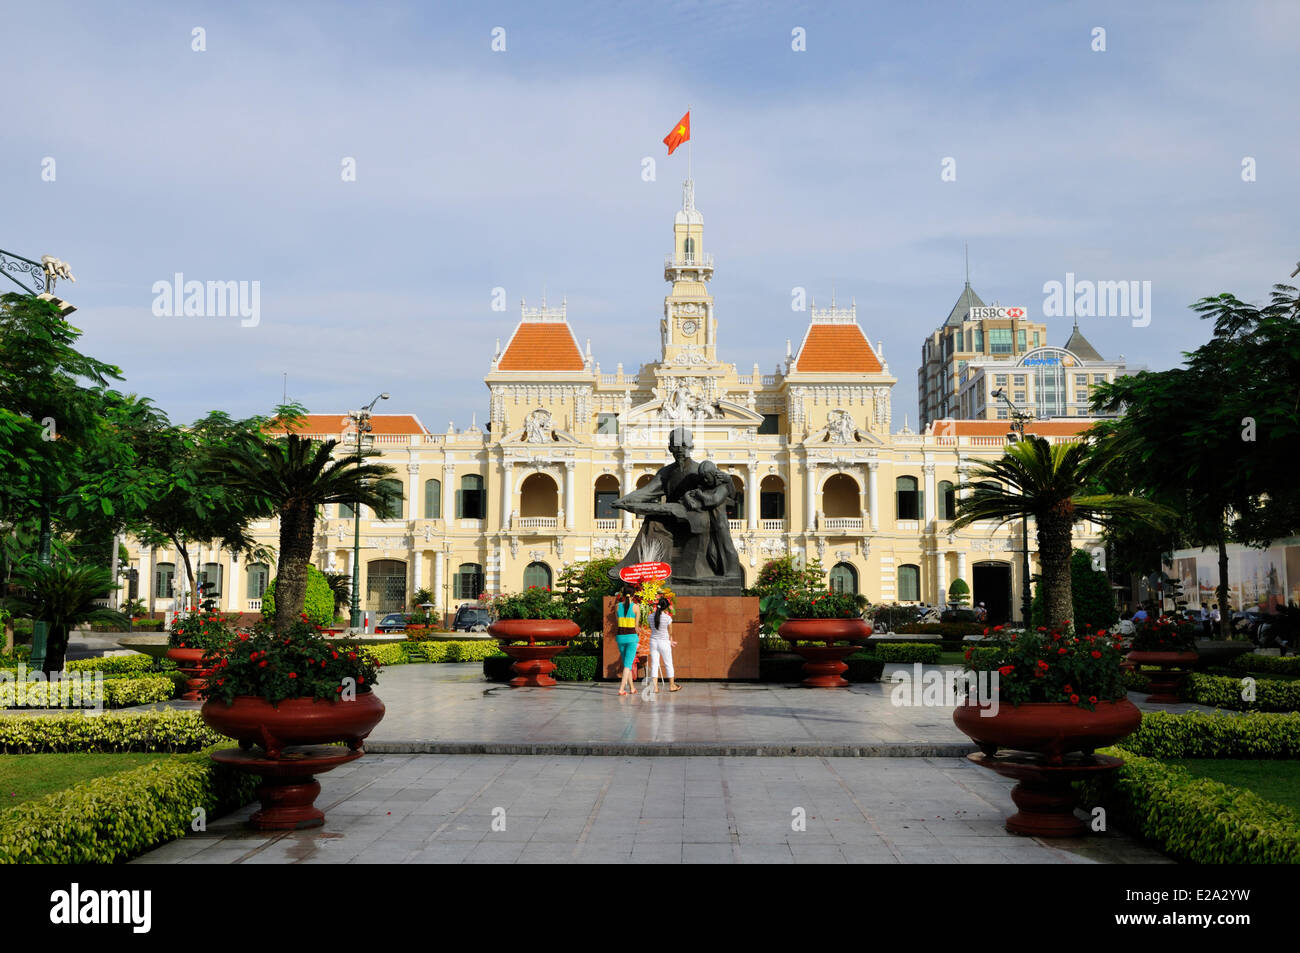 Ho Chi Minh, Vietnam Image & Photo (Free Trial)